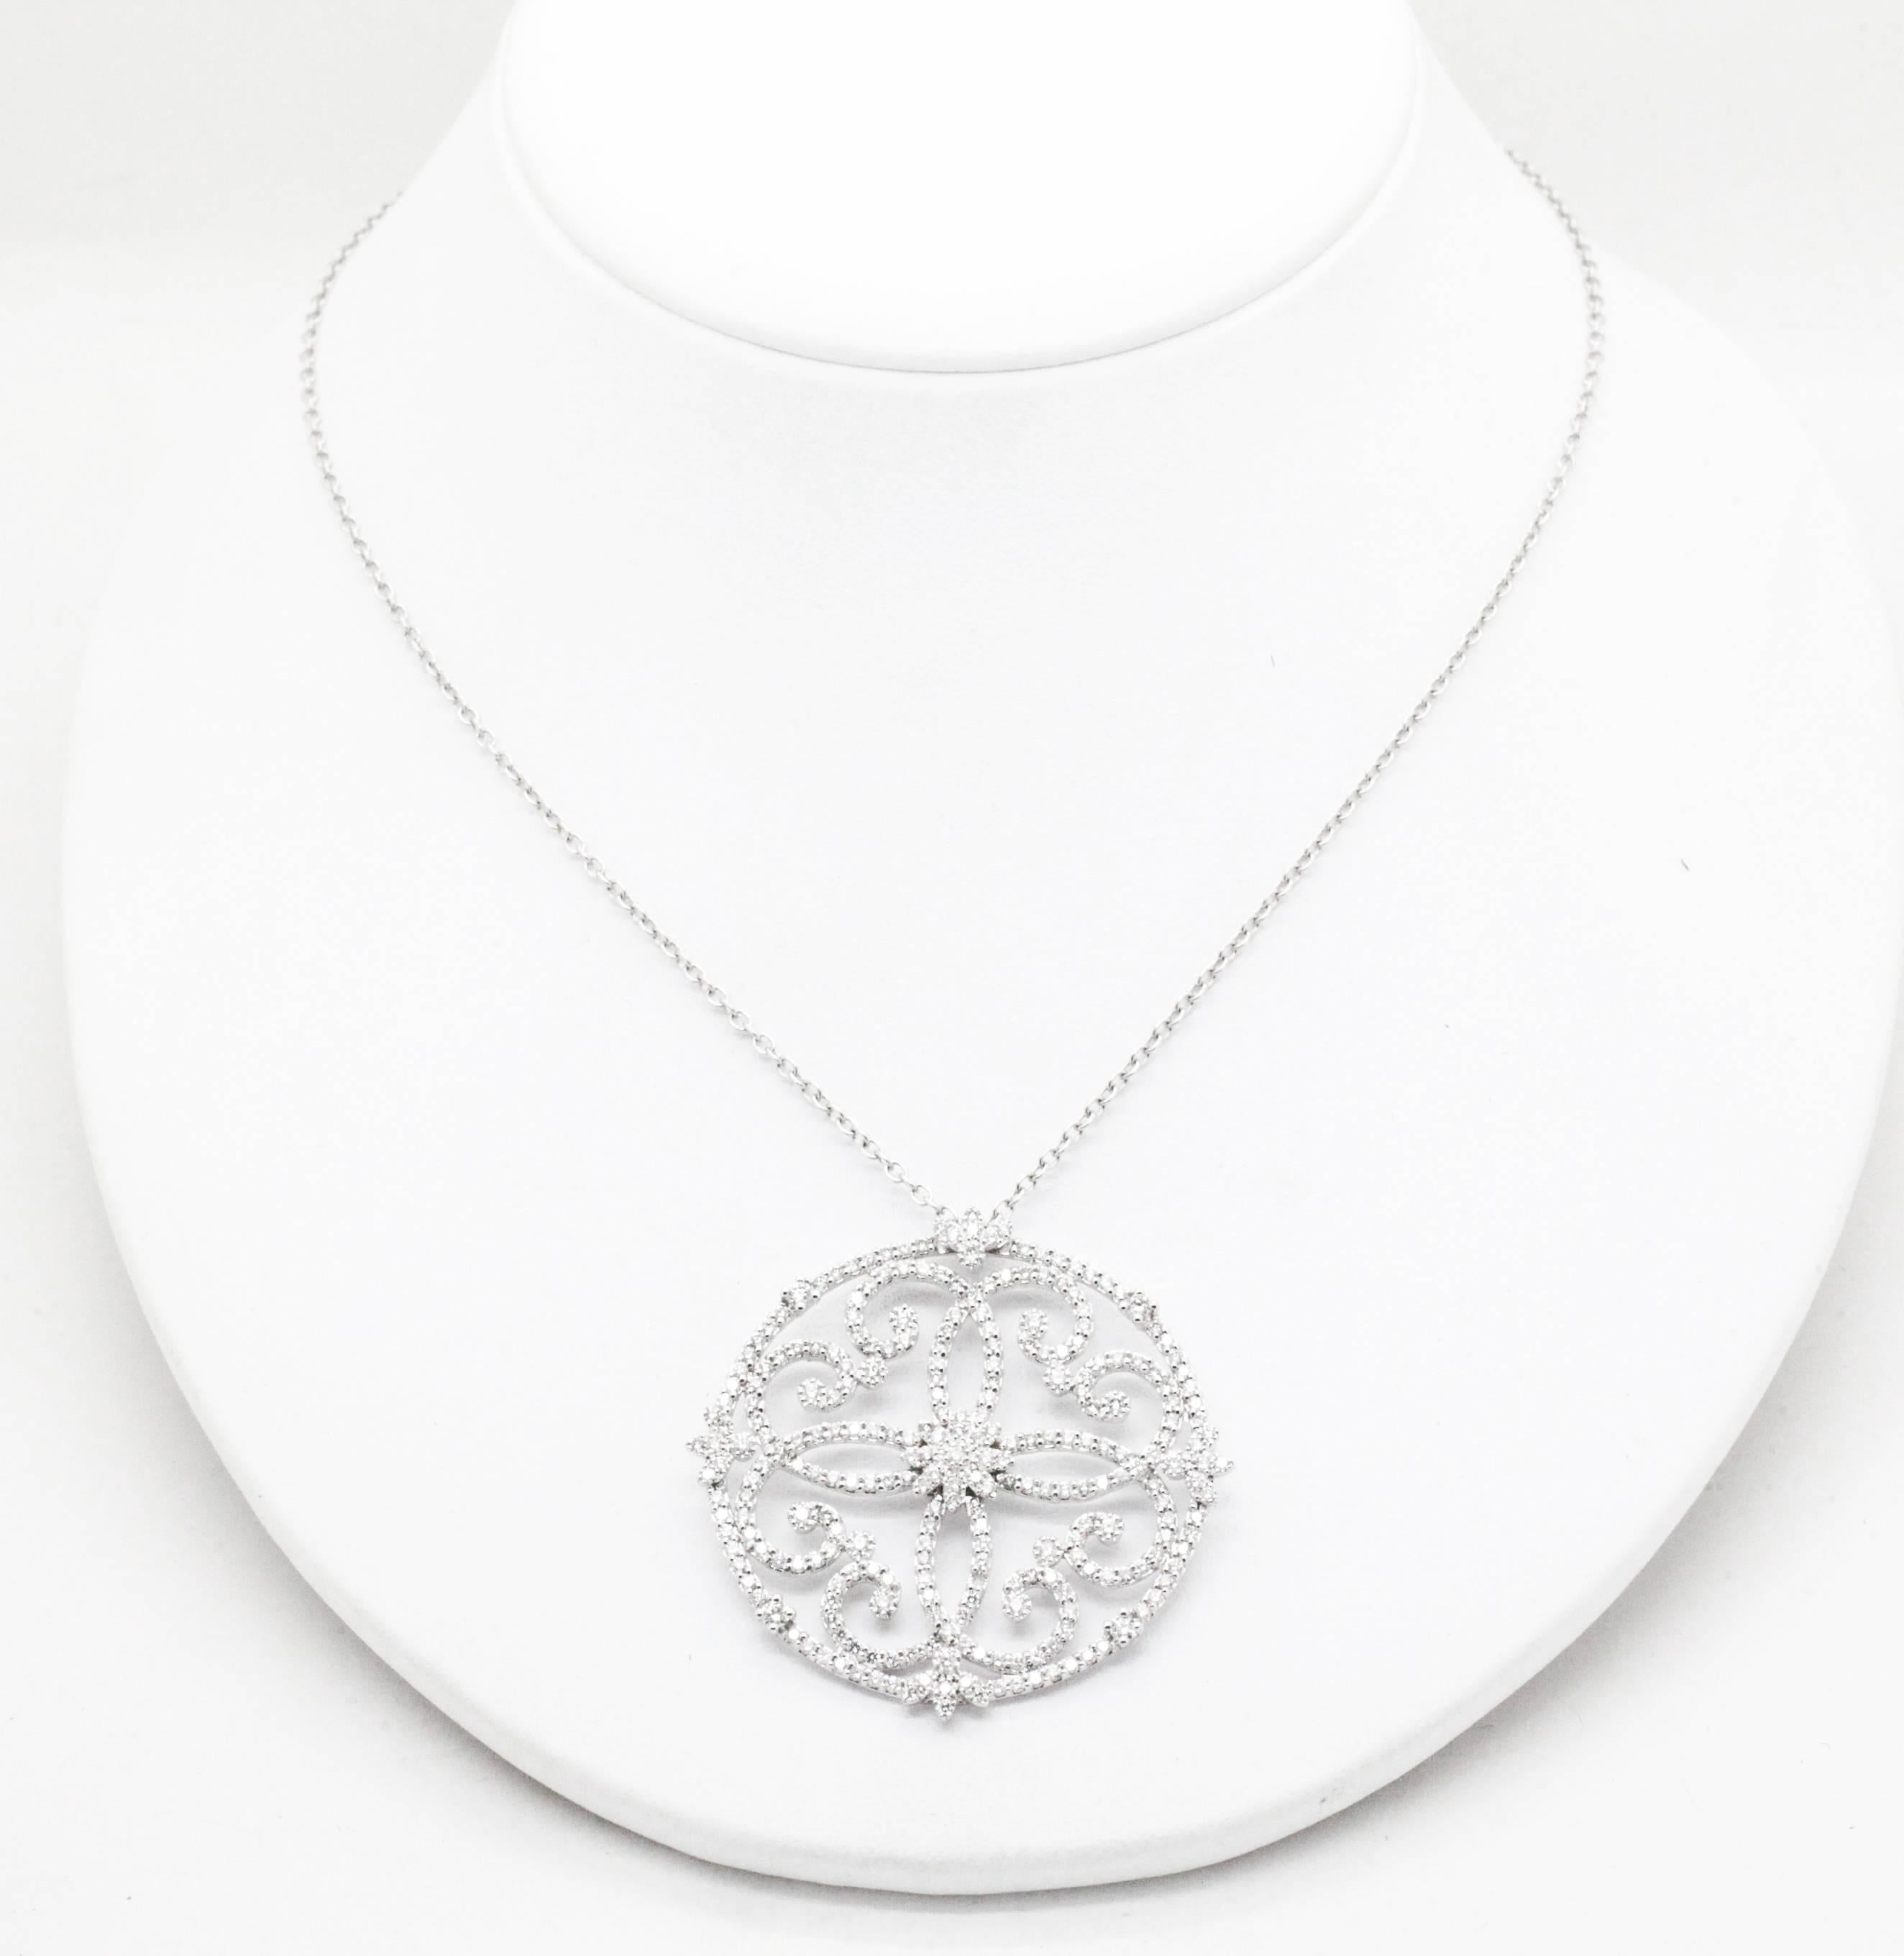 2.80 Carat White Diamonds Necklace Handmade in 18 Karat White Gold For Sale 3